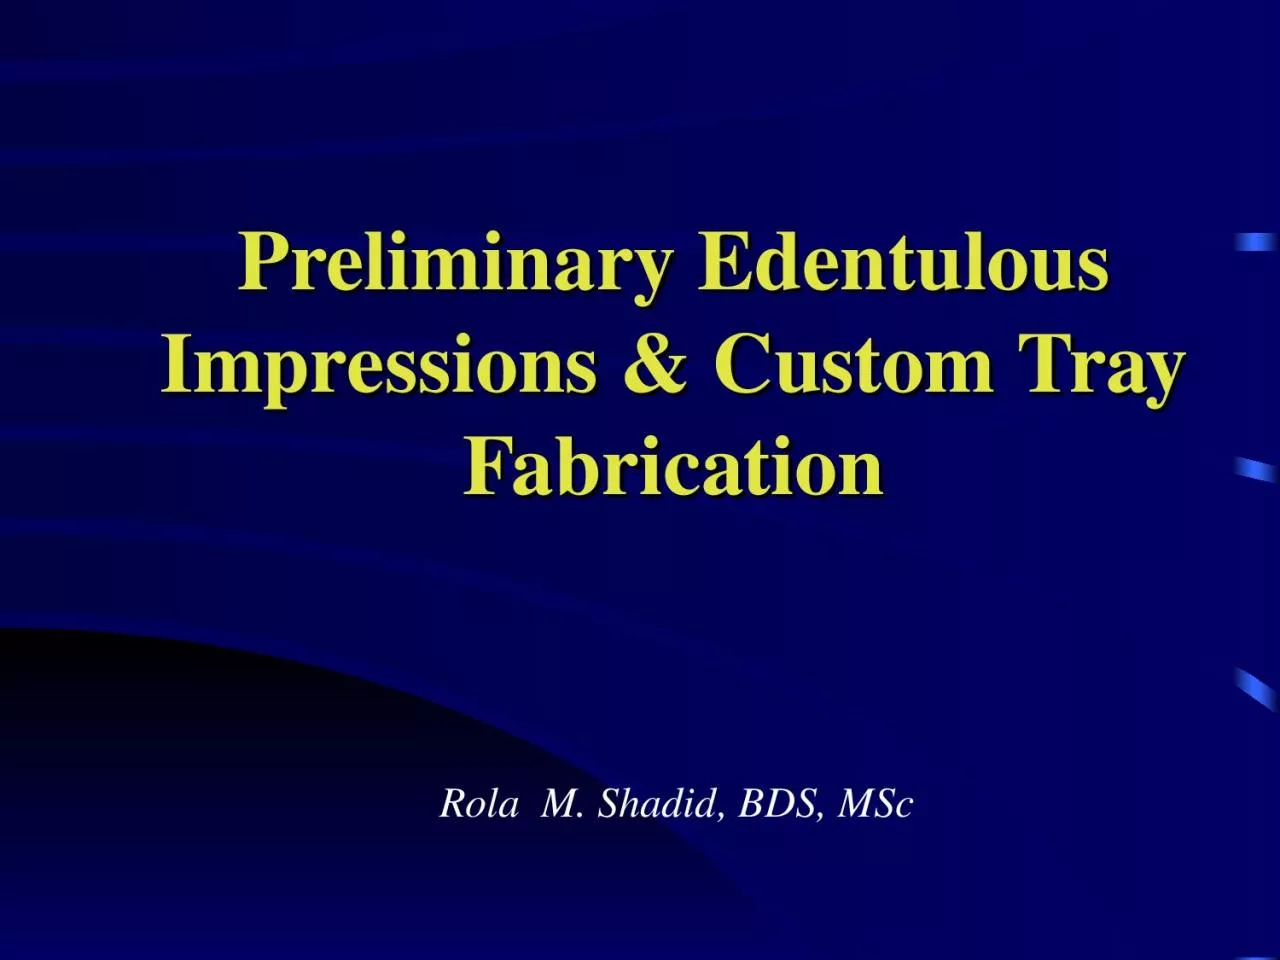 Preliminary Edentulous Impressions & Custom Tray Fabrication